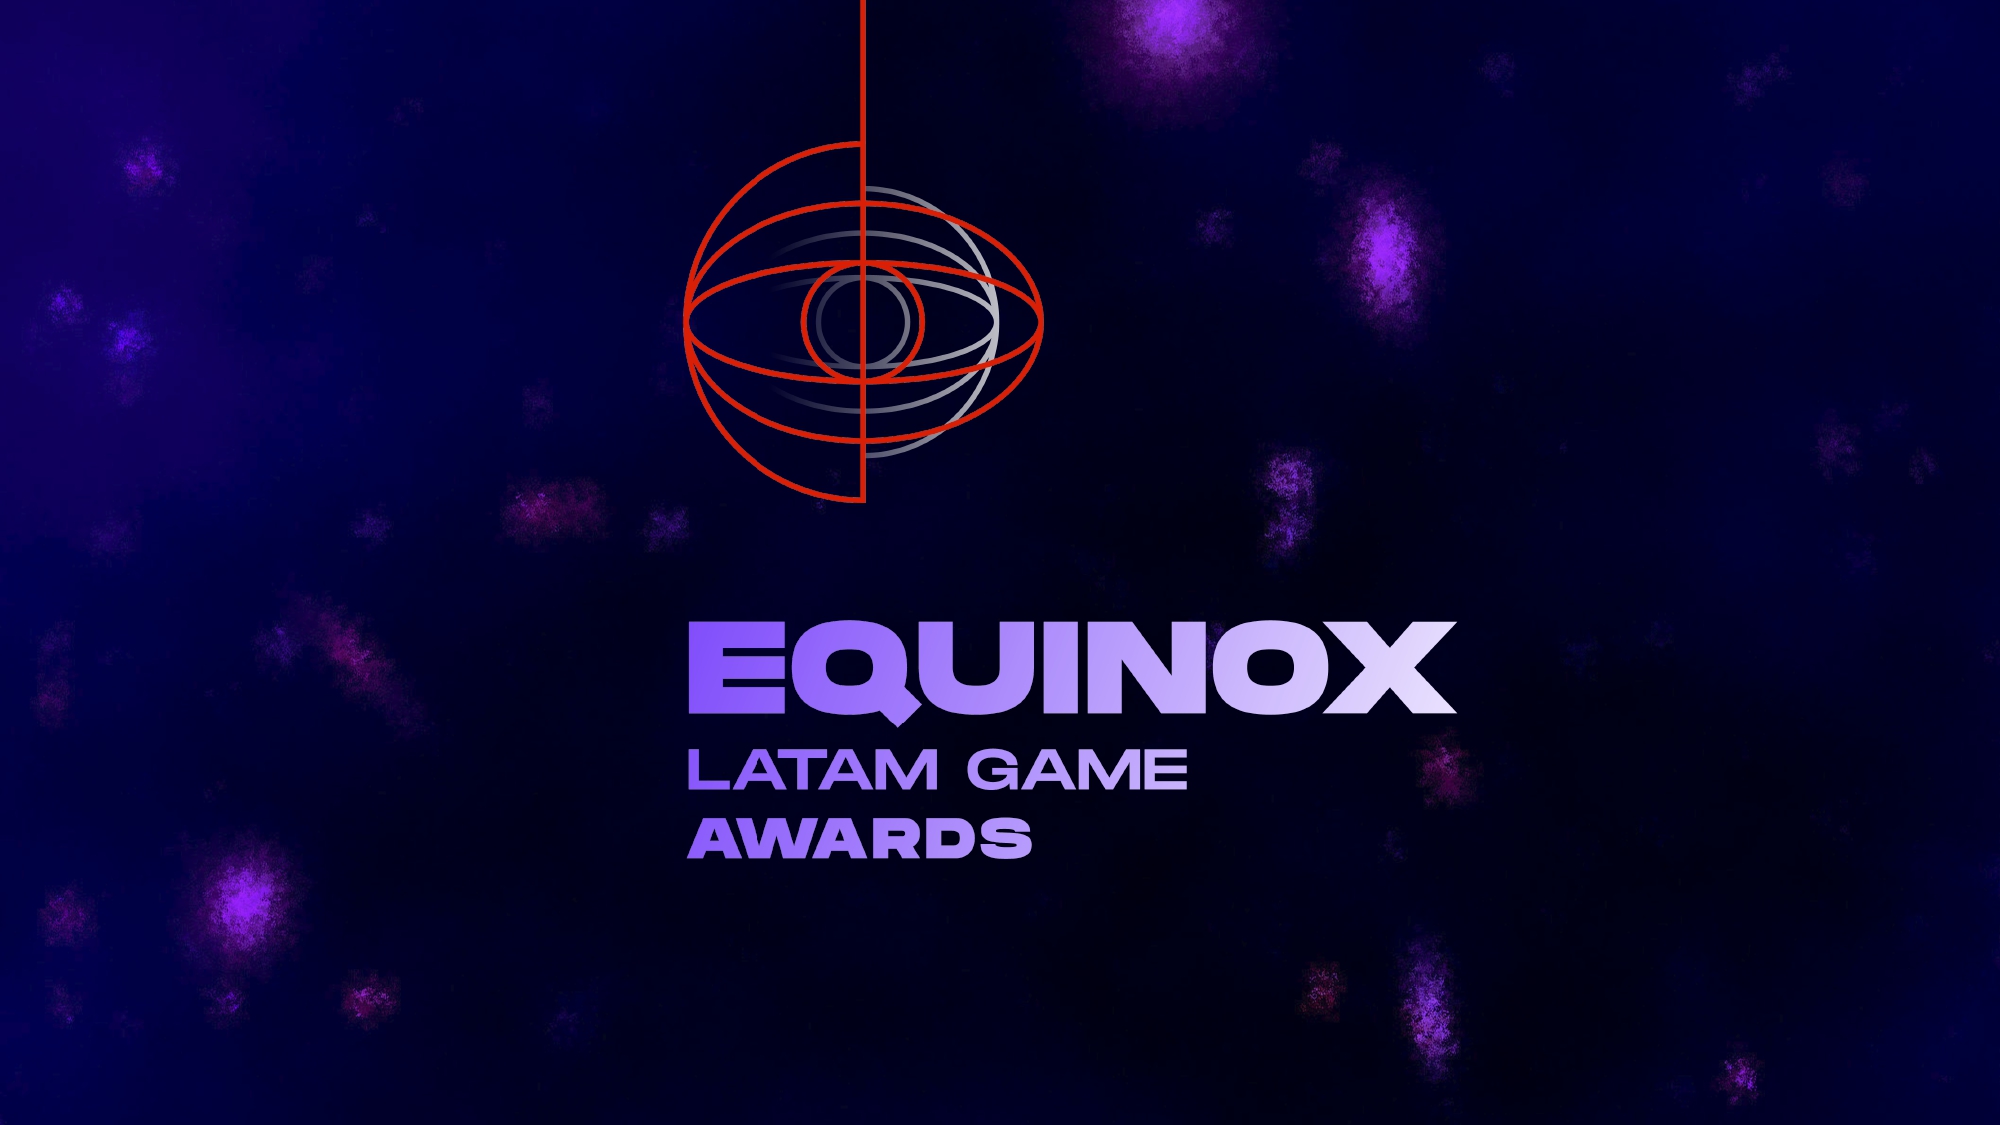 Equinox Latam Game Awards